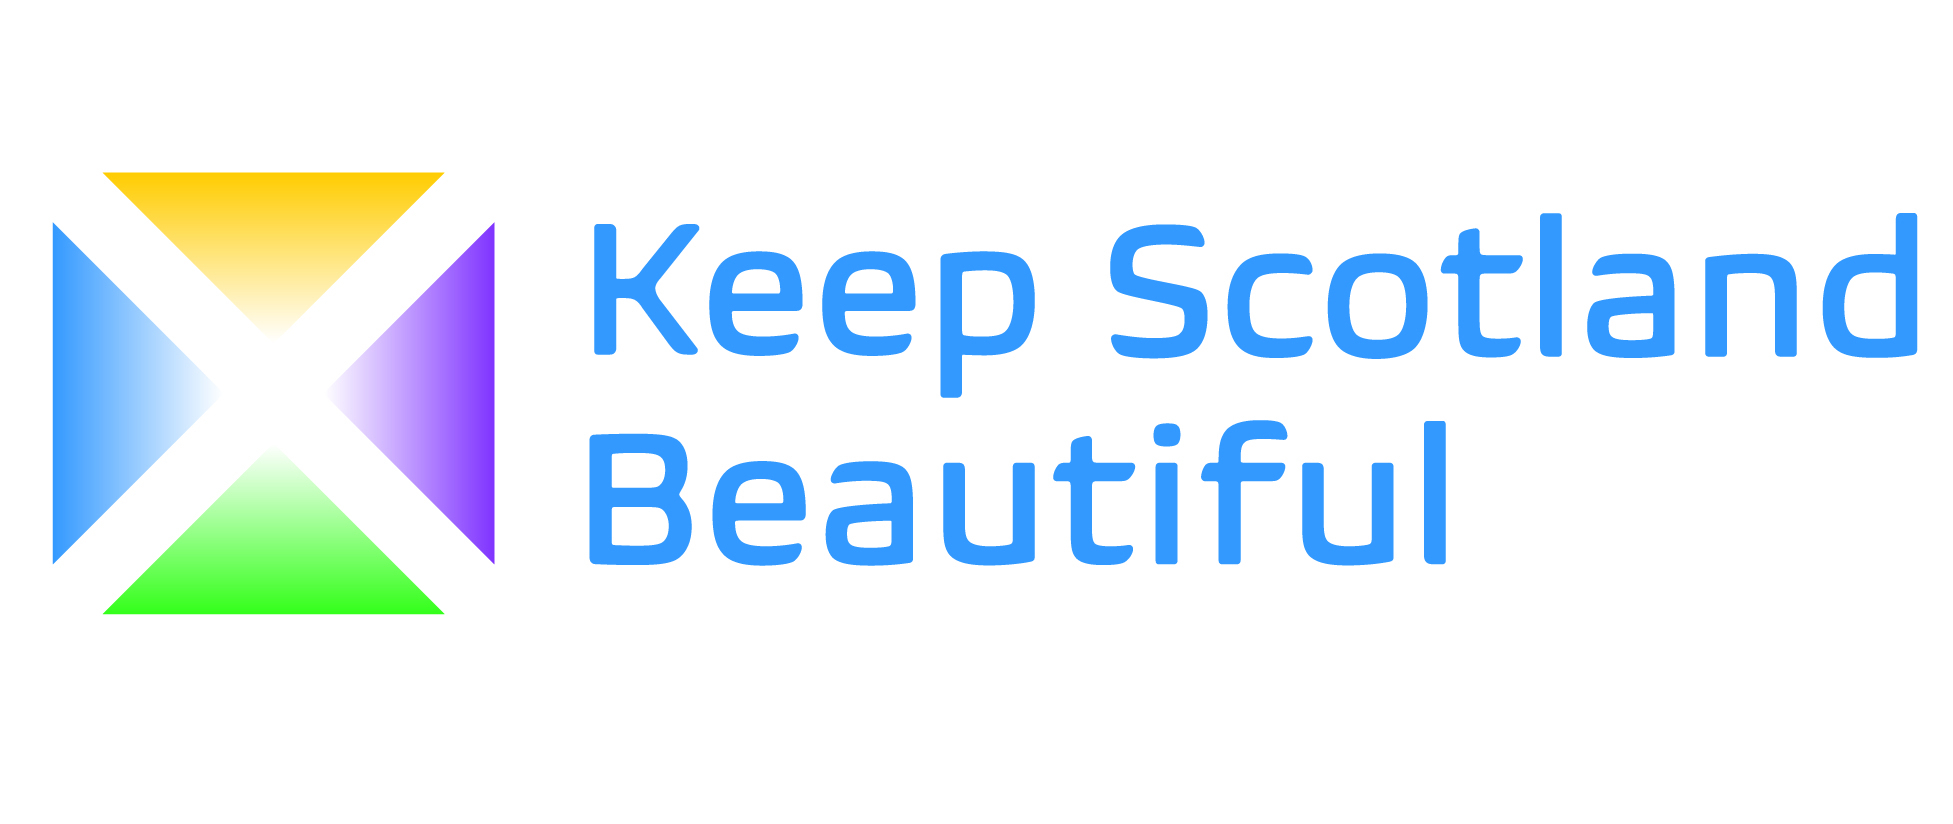 Keep scotland beautiful master cmyk 300